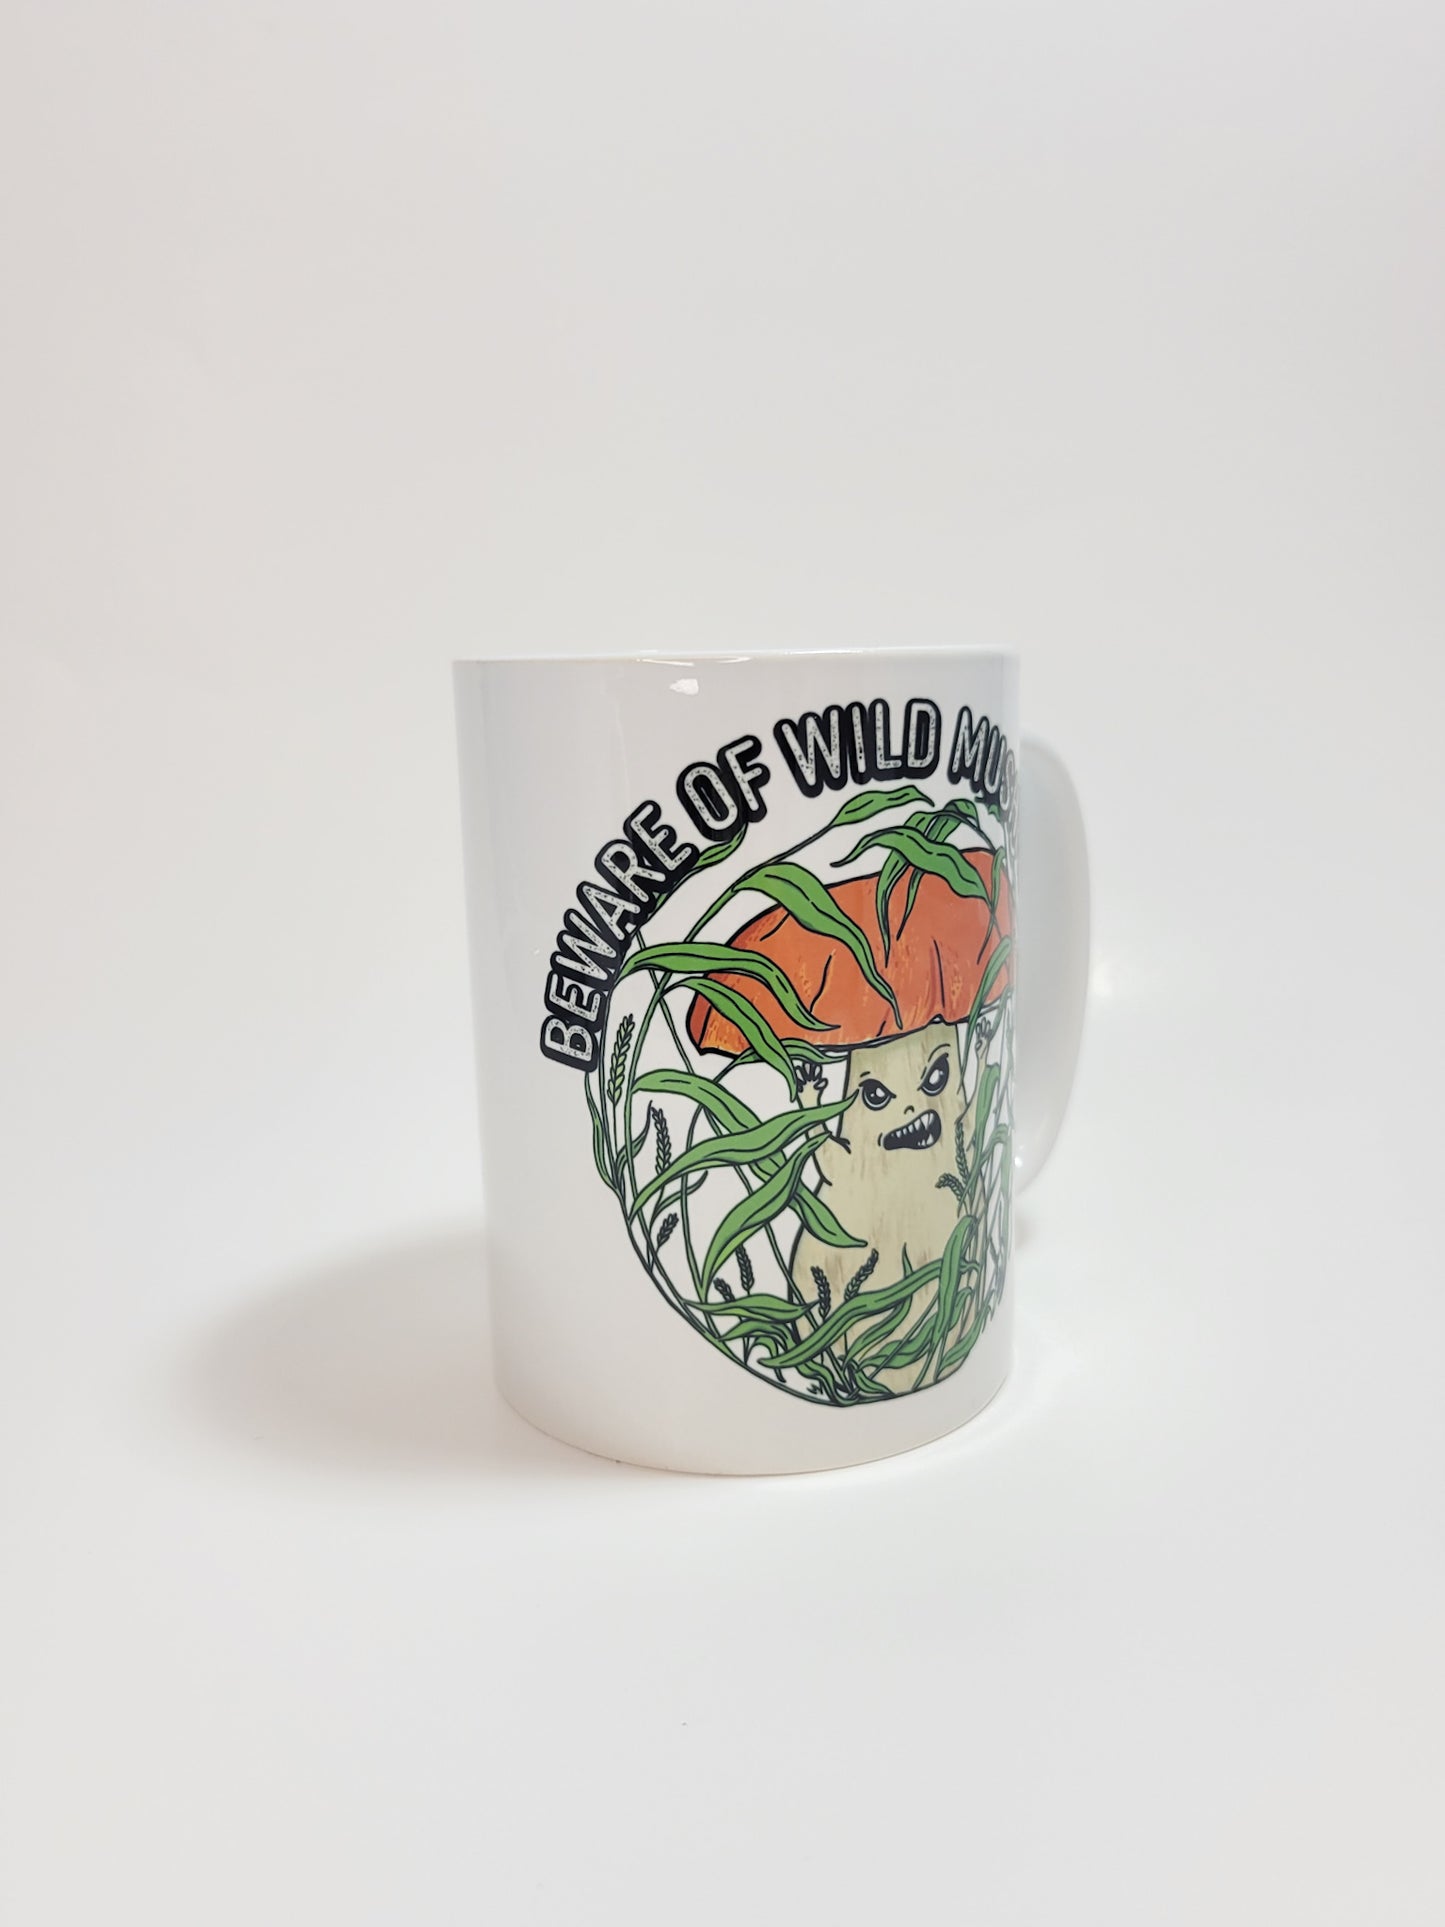 Beware Of Wild Mushrooms | Funny Porcini Mushroom Mug | Mushroom Artwork on Ceramic Cup | 11oz/15oz Sizes